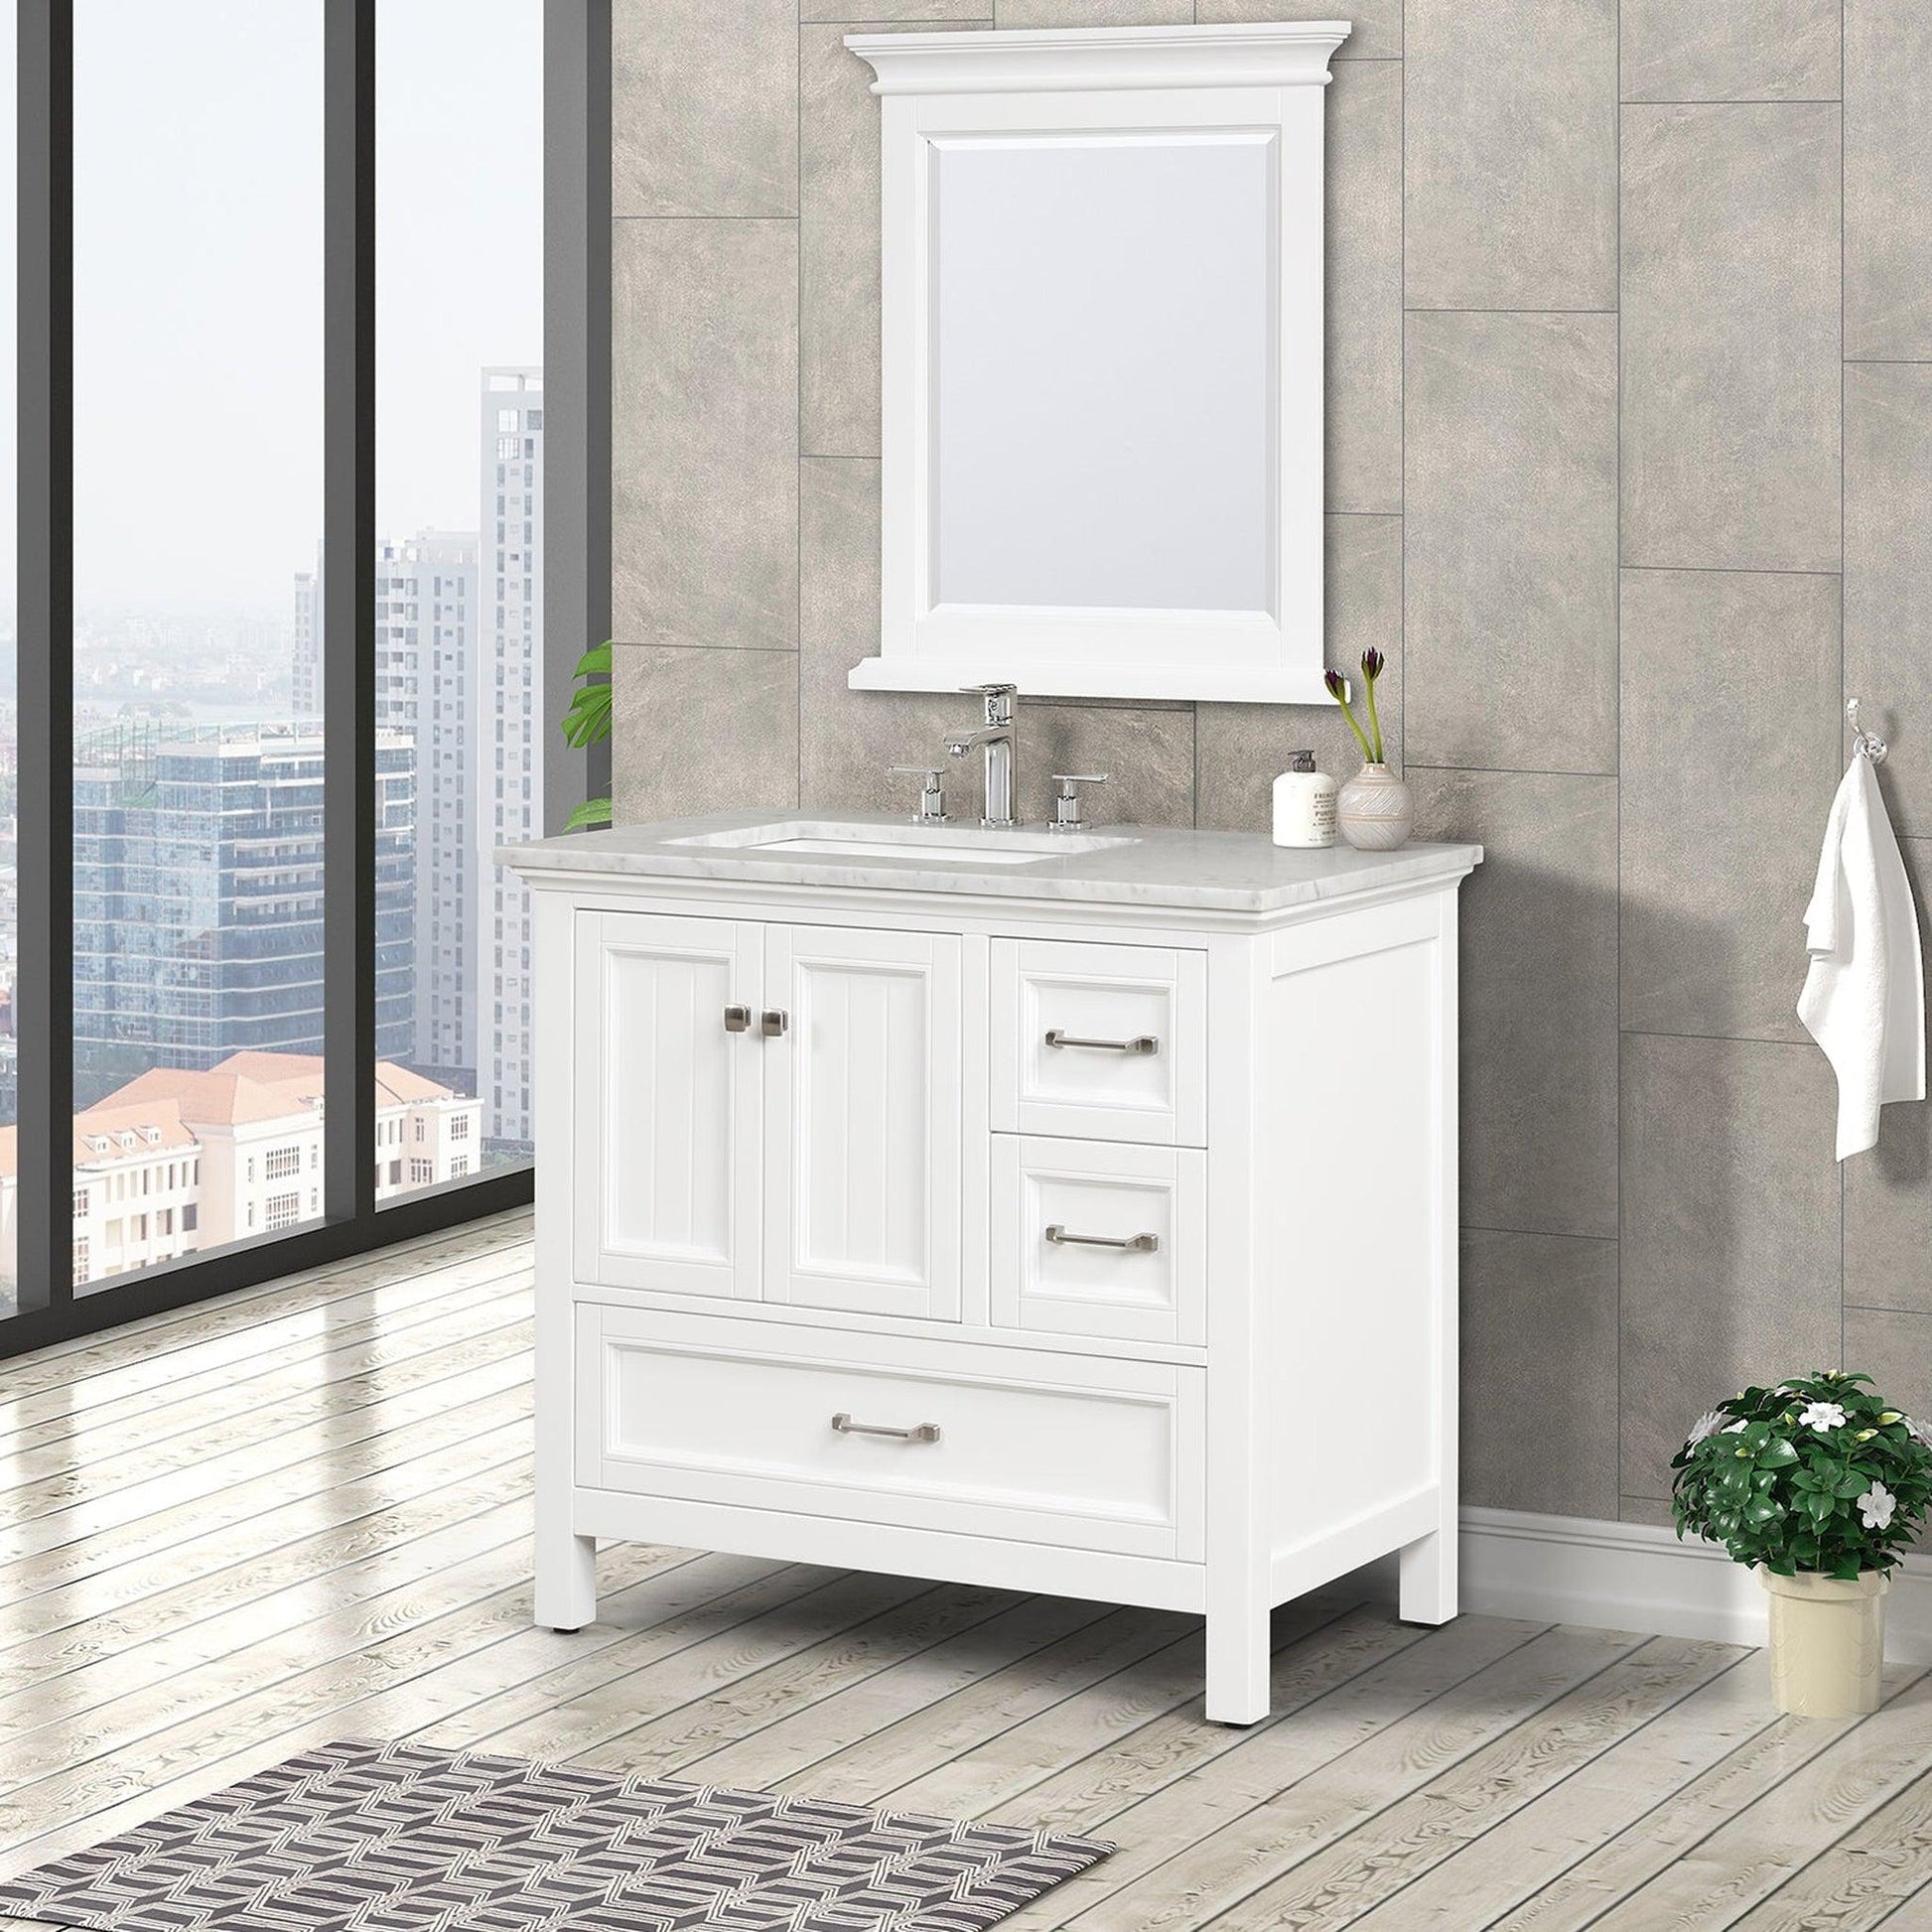 Eviva Britney 36" x 34" White Freestanding Bathroom Vanity With Carrara Marble Countertop and Single Undermount Ceramic Sink